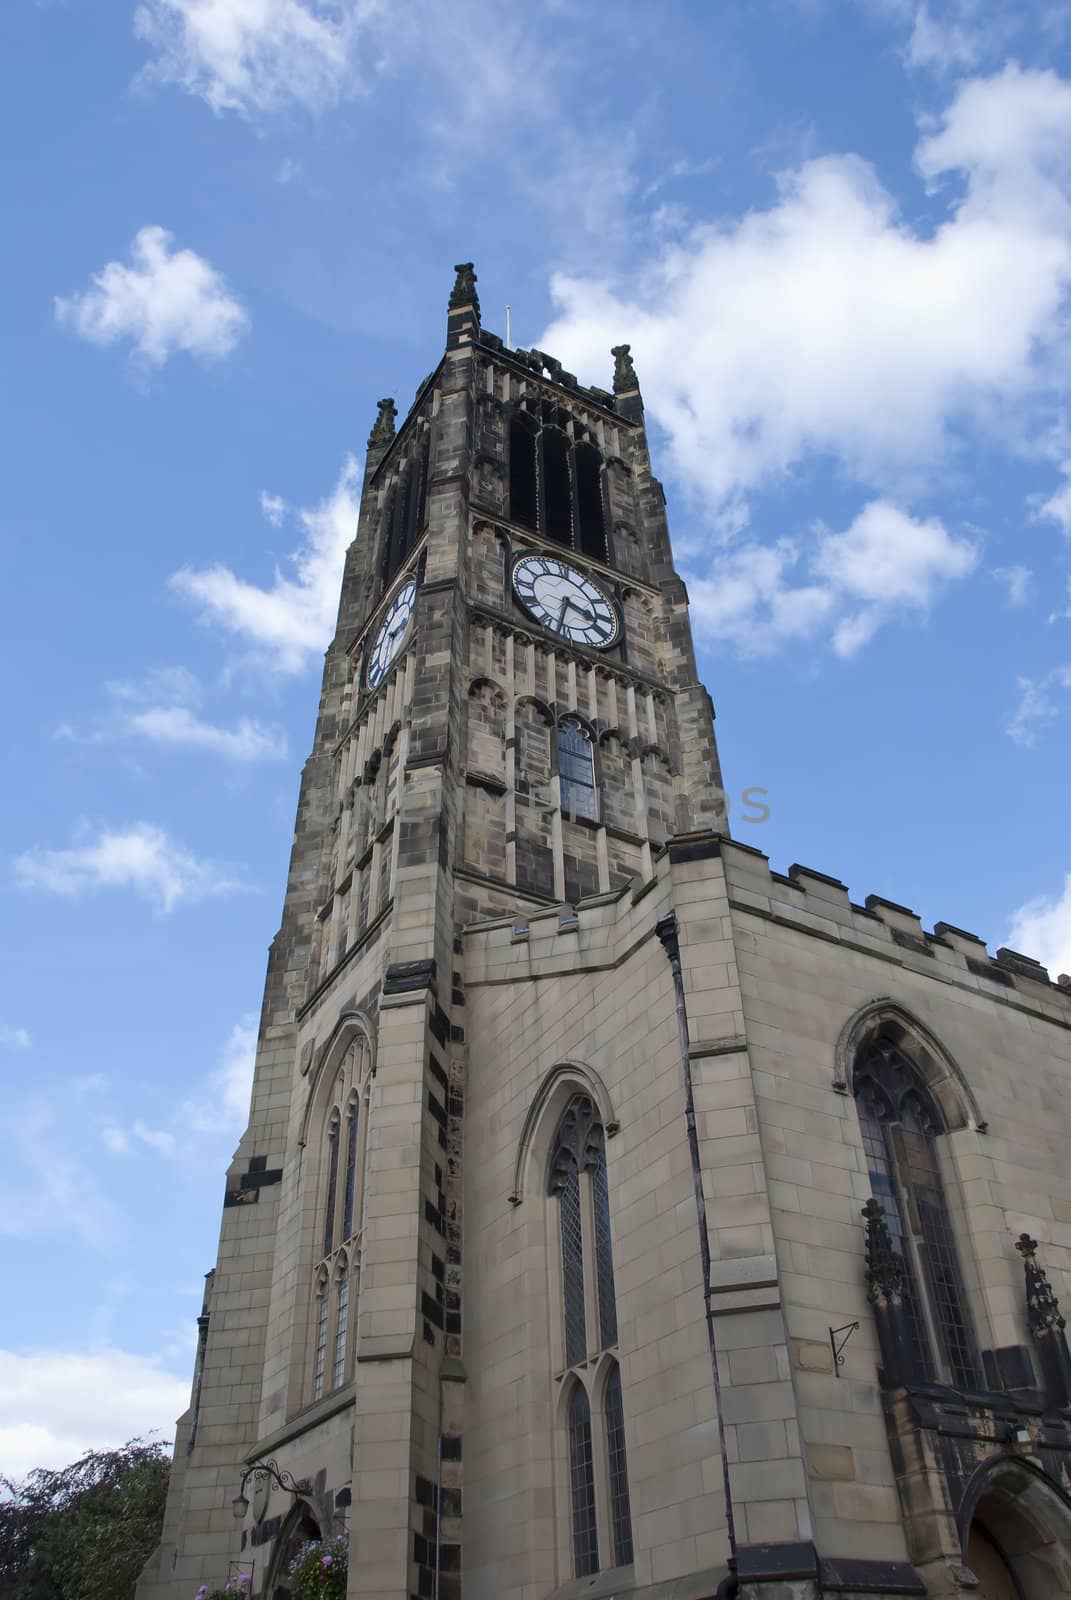 The Clocktower of a Yorkshire Parish Church